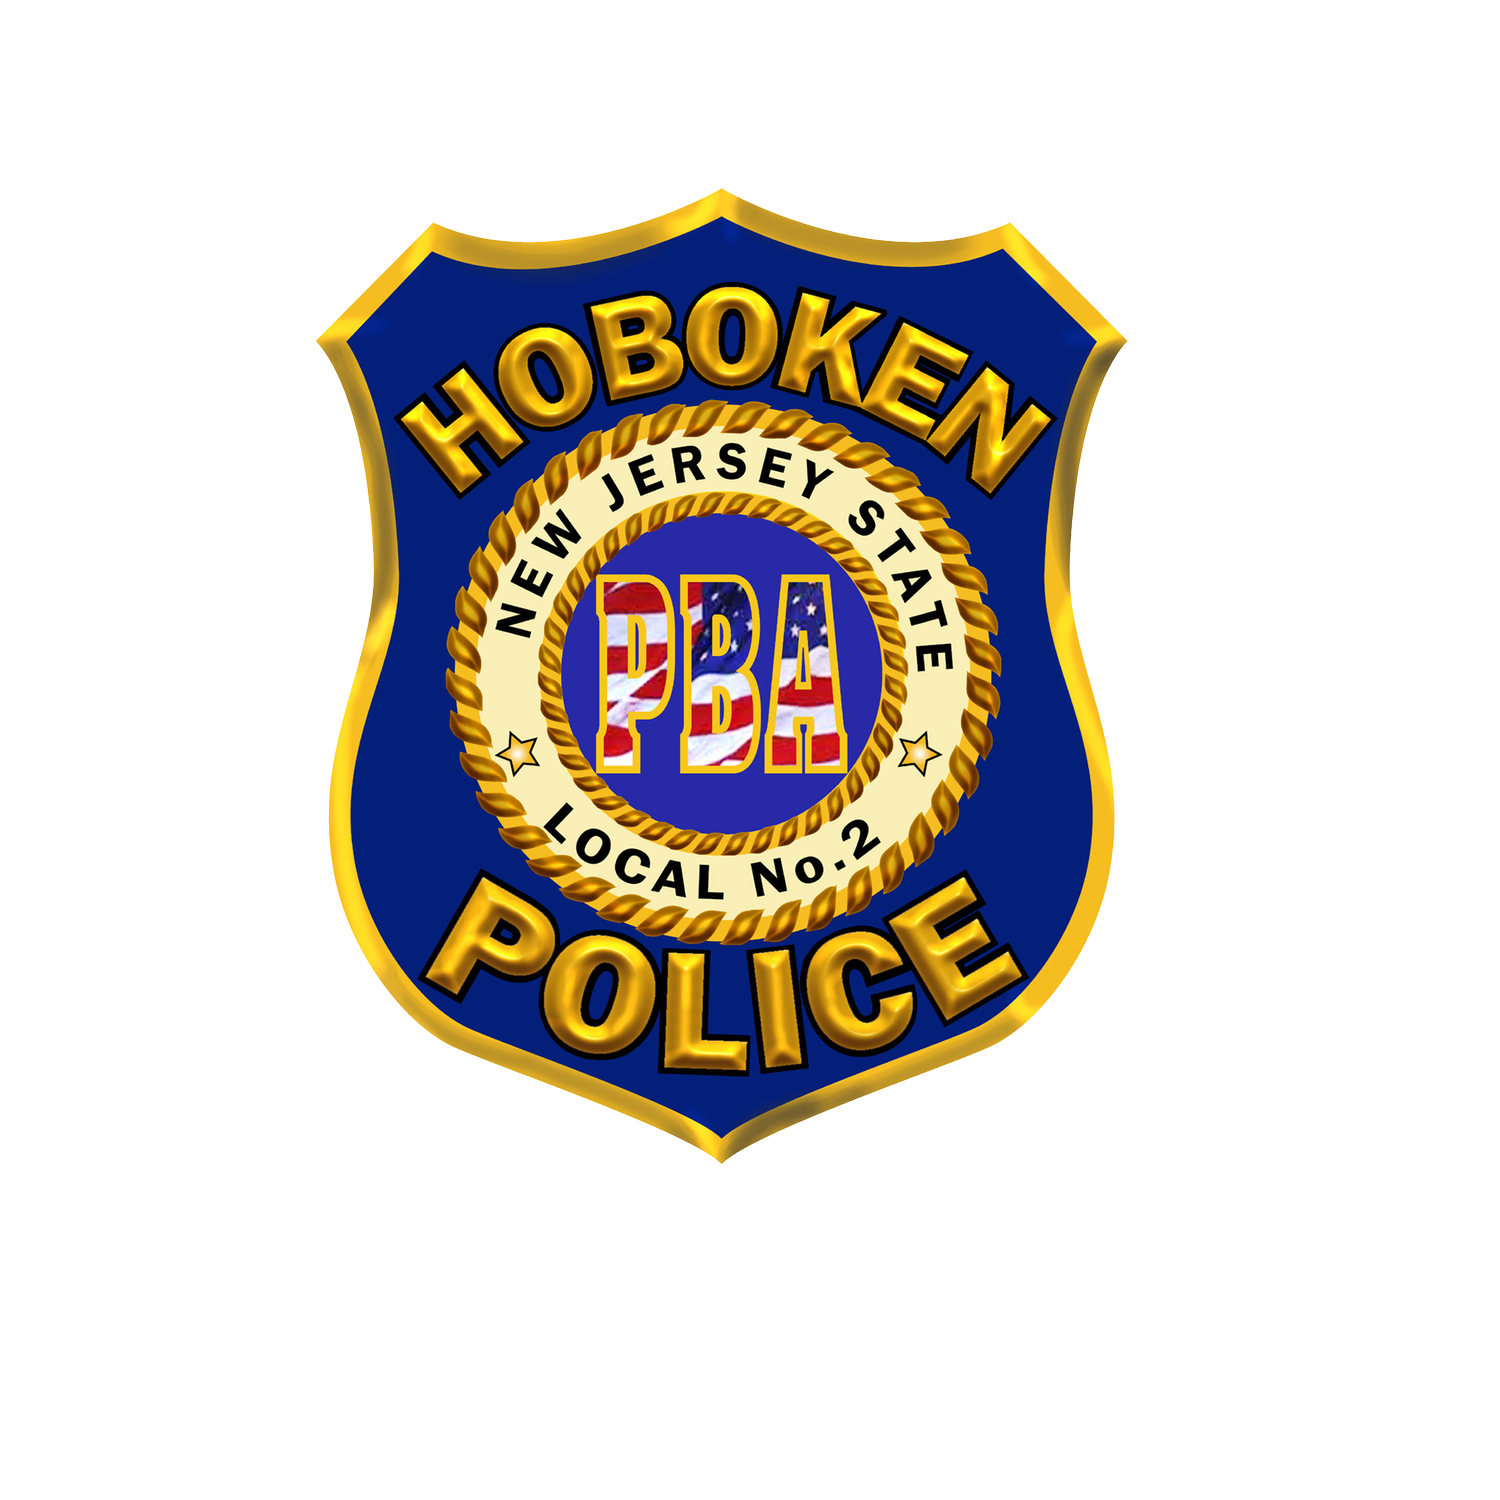 Hoboken Police Benevolent Association Local #2 